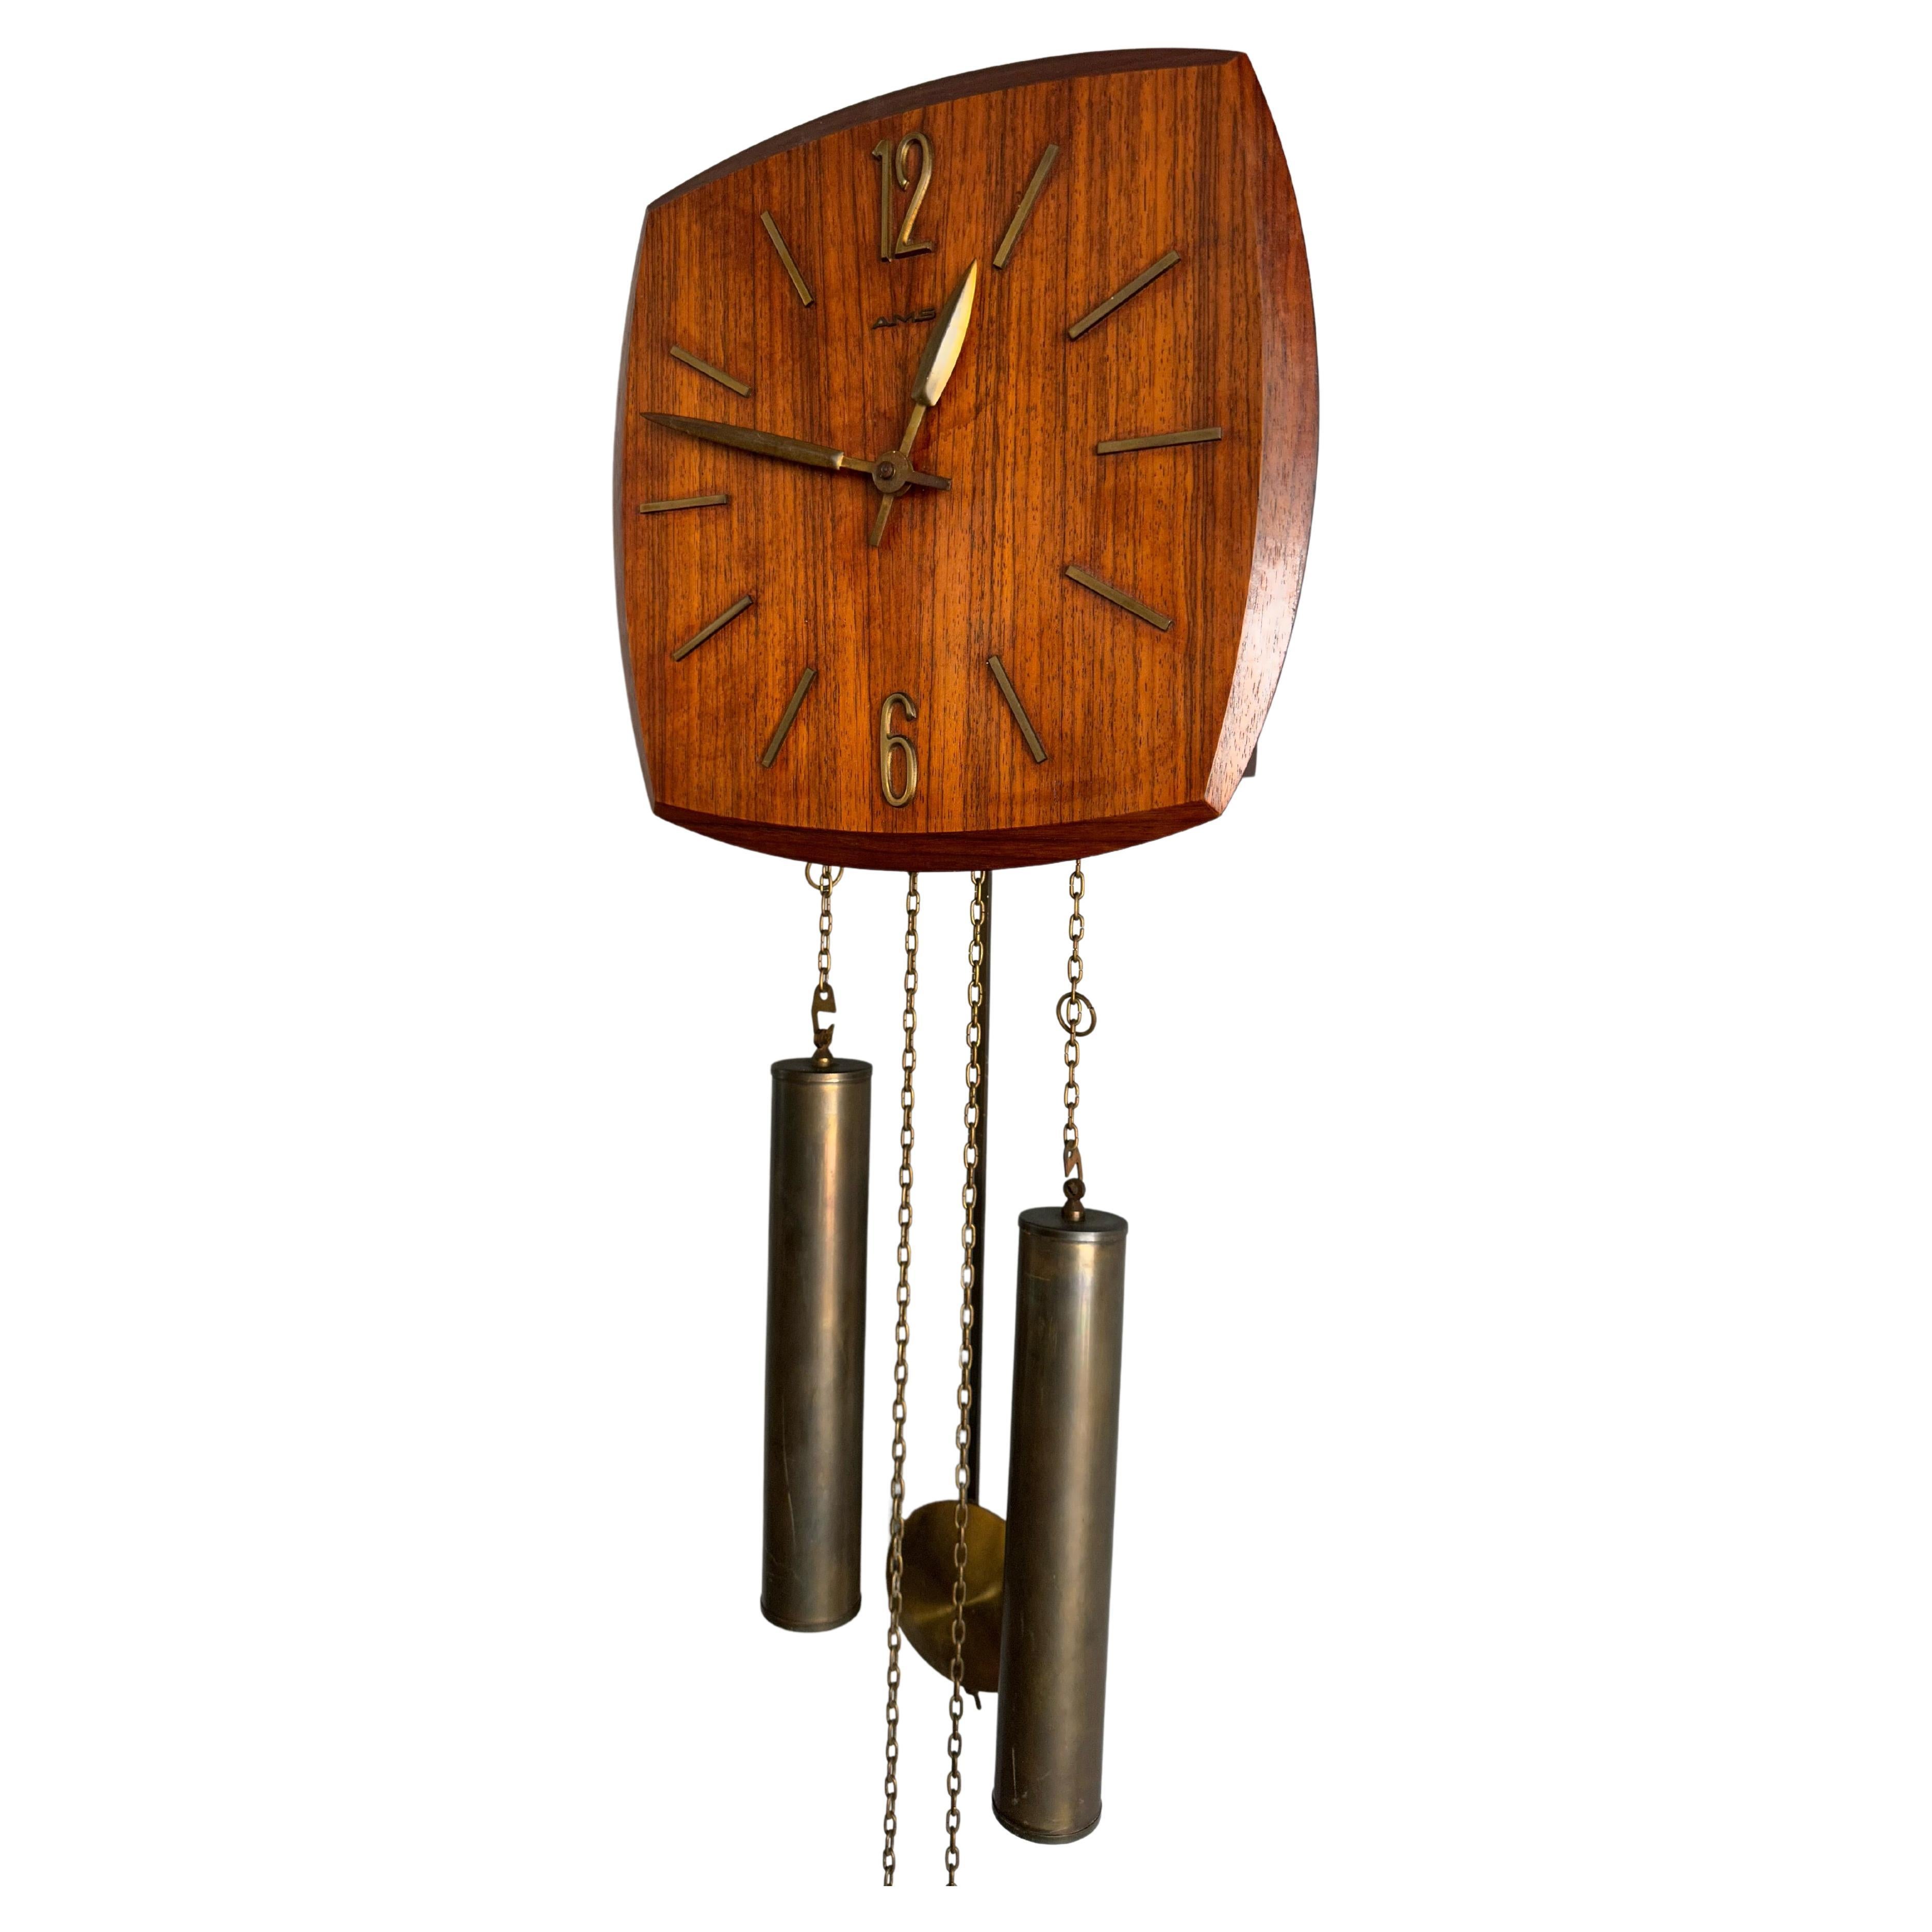 Beautiful Midcentury Danish Teak Wood Pendulum Wall Clock, Great Condition 1960s For Sale